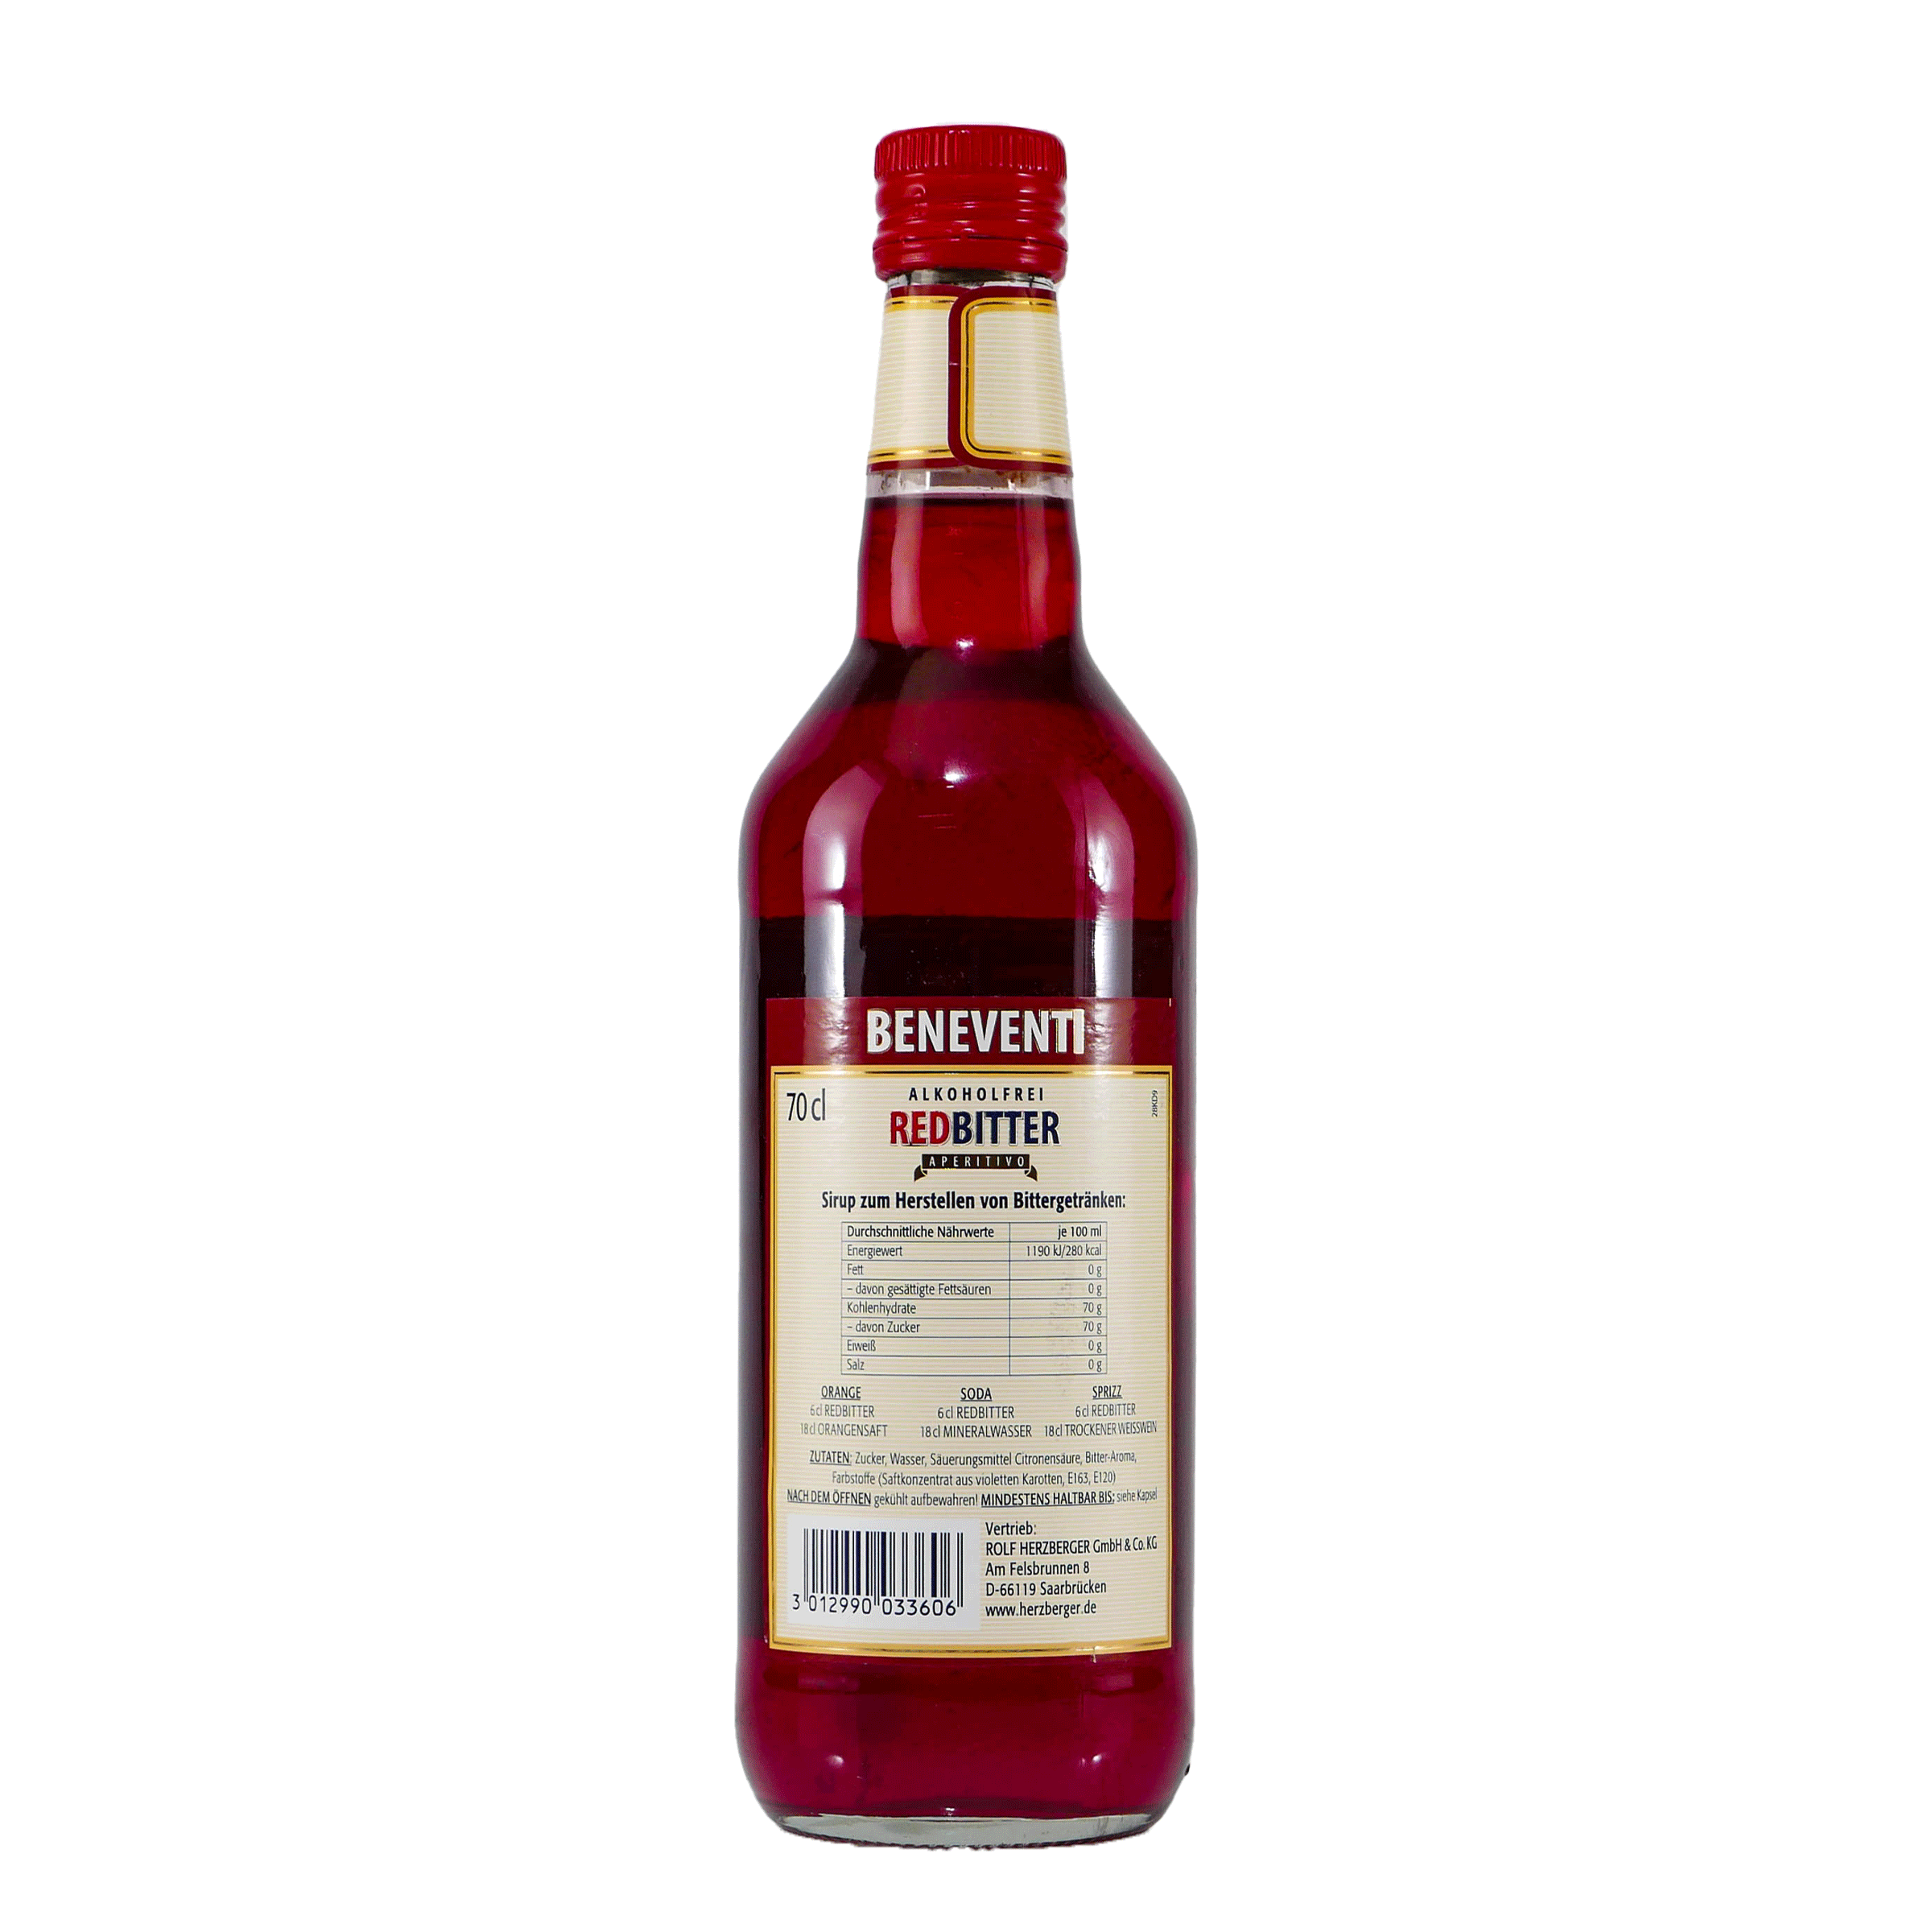 Beneventi Red Bitter Aperitivo -alkoholfrei- (6 x 0,7L)